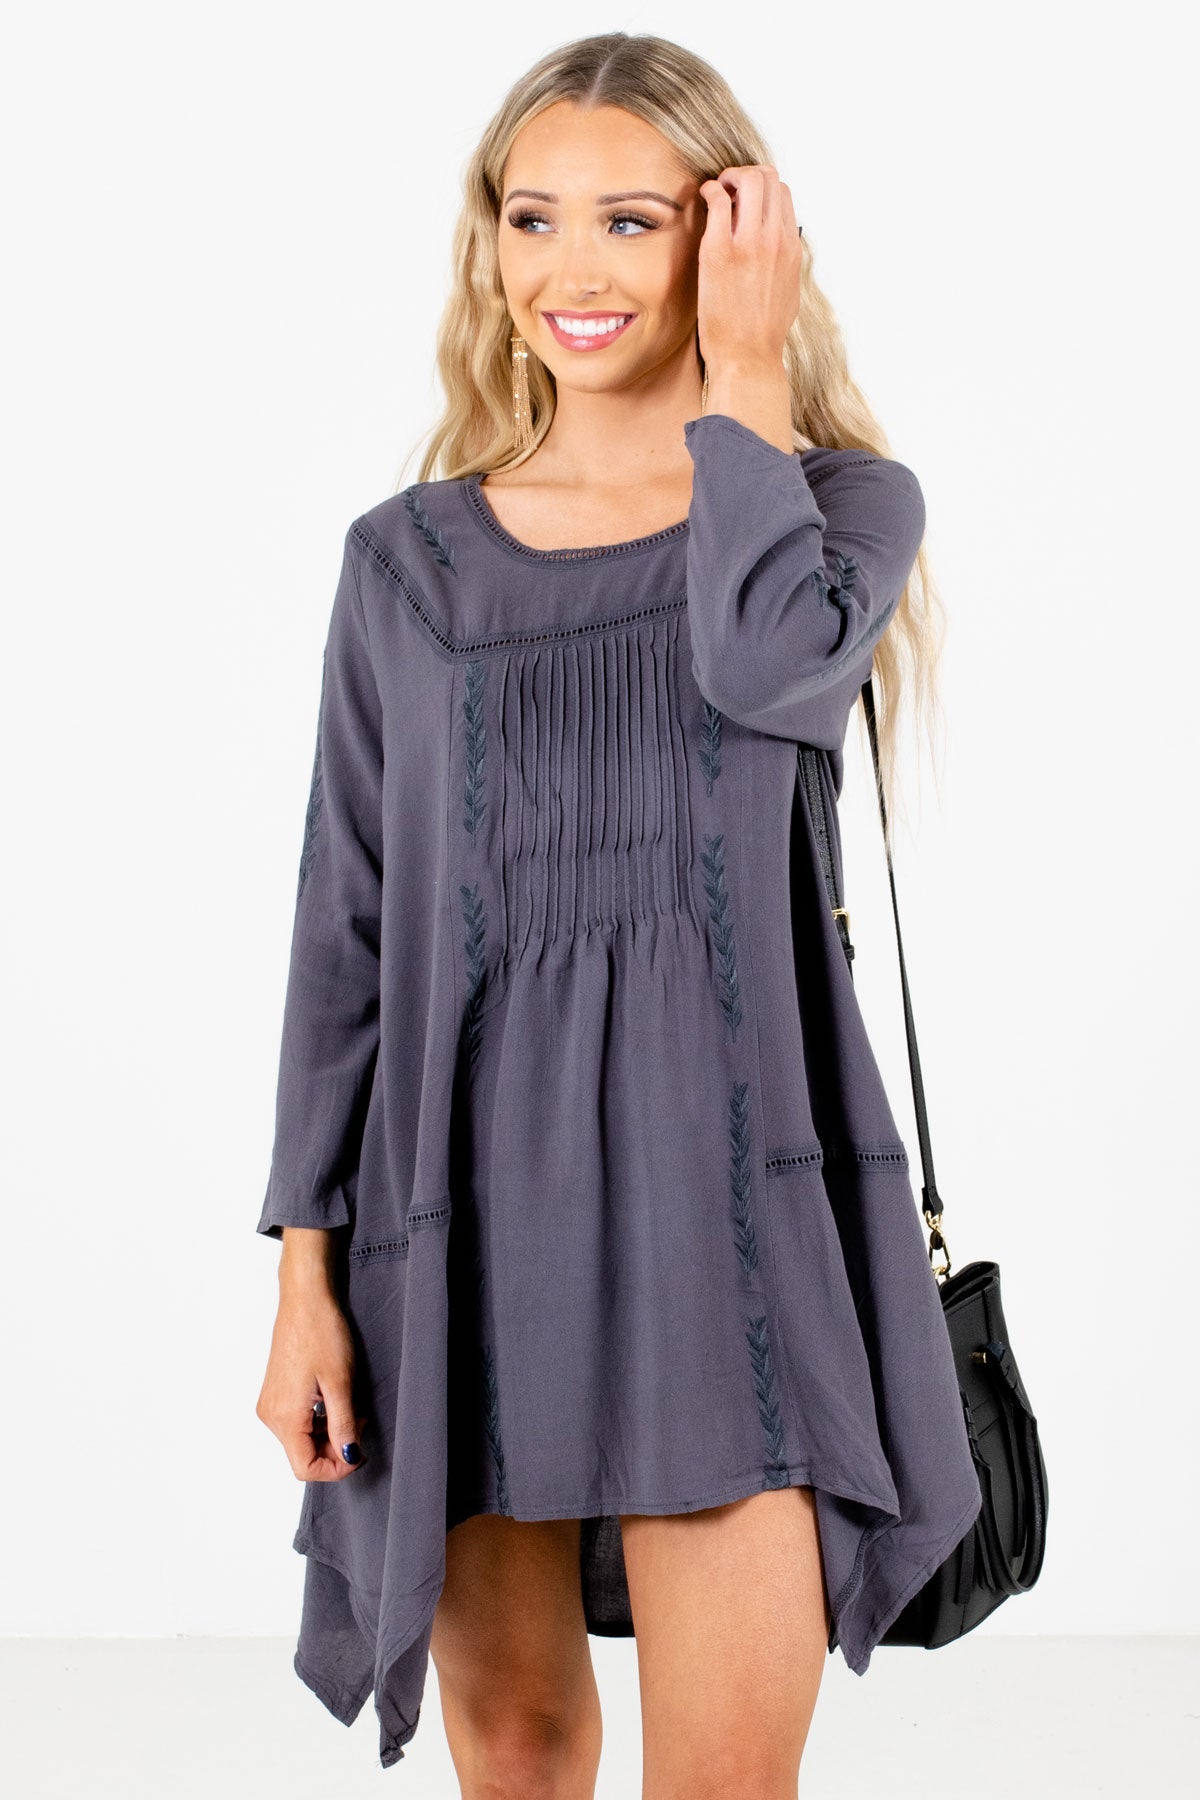 Women’s Charcoal Gray Pleated Boutique Mini Dresses